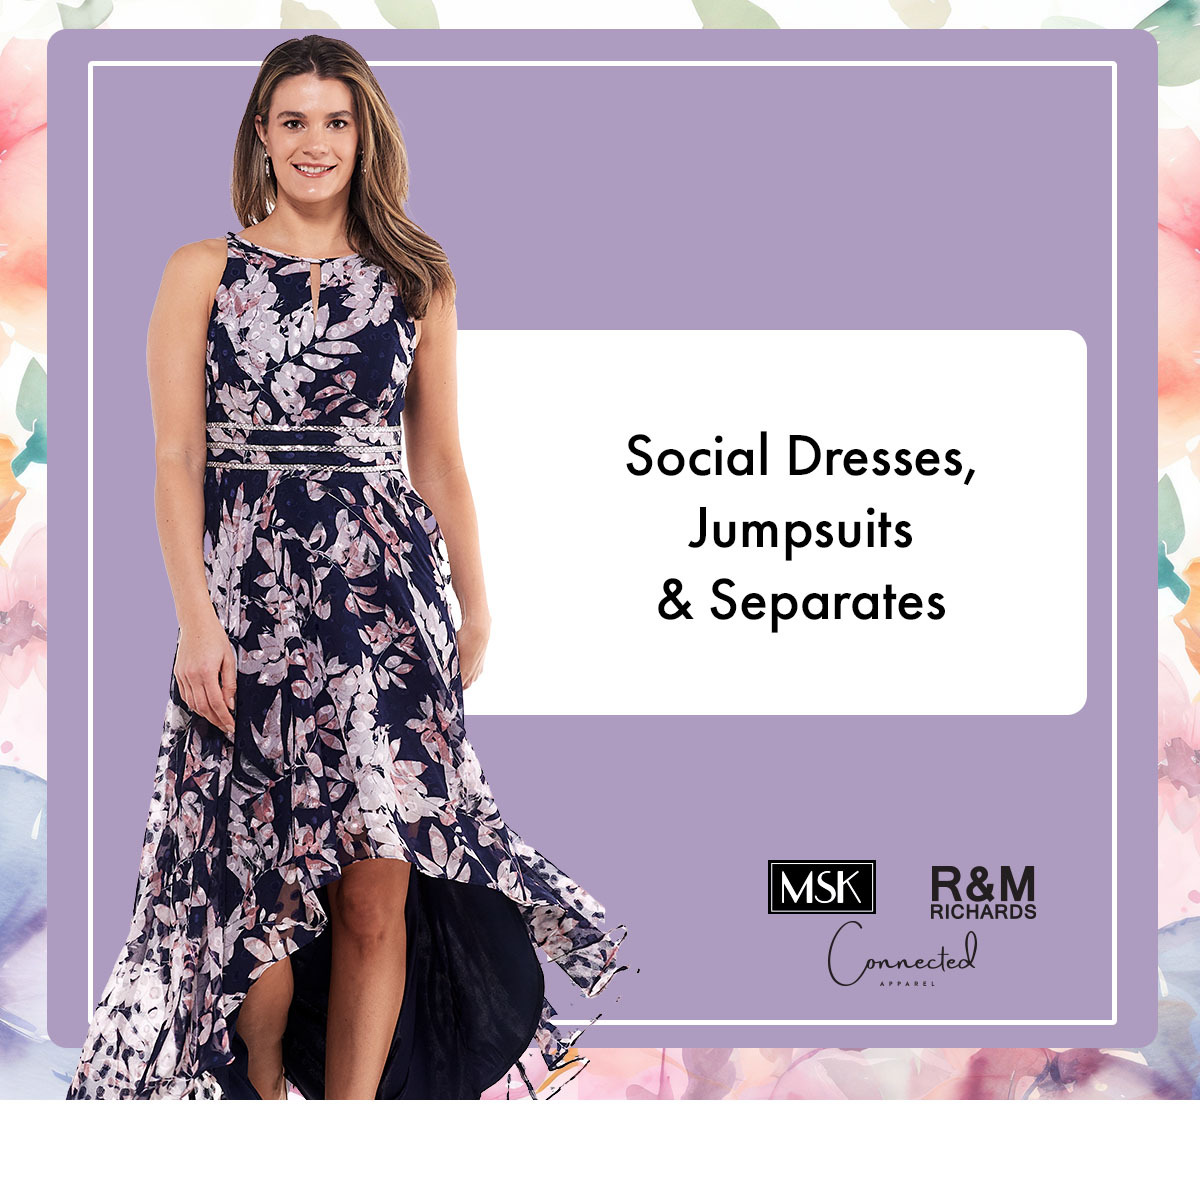 Social Dresses, Jumpsuits & Separates